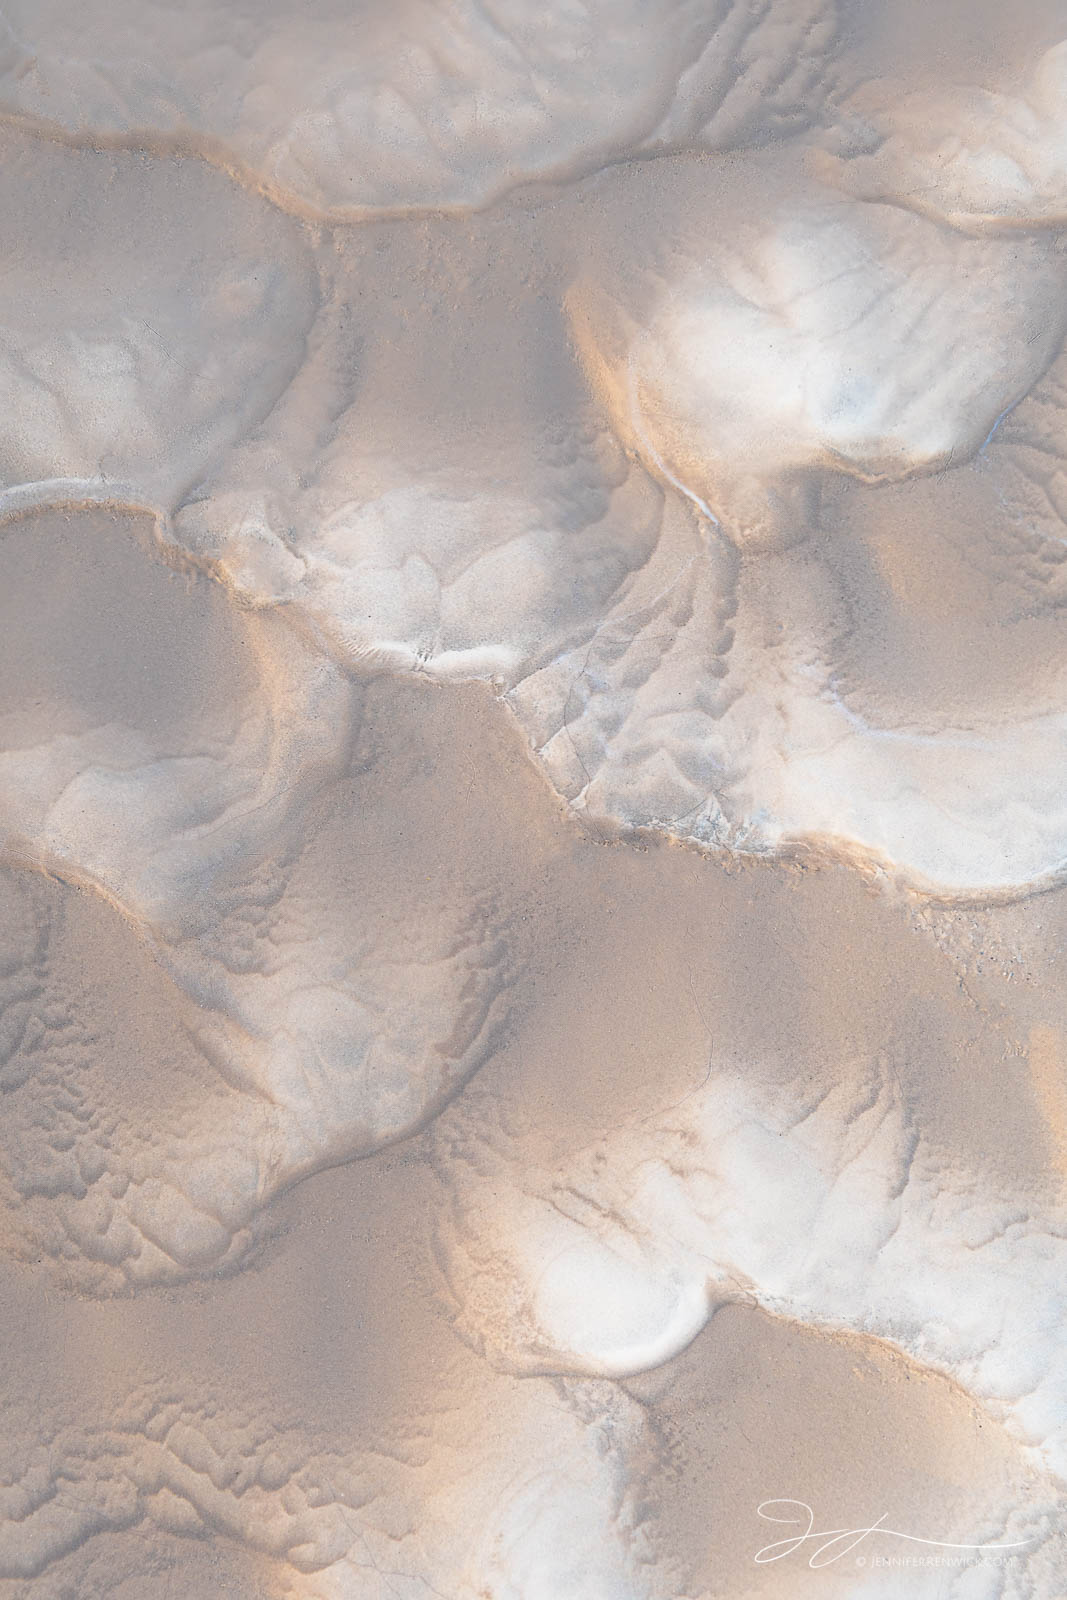 Fresh mud from a flow across the desert floor creates billowy patterns.